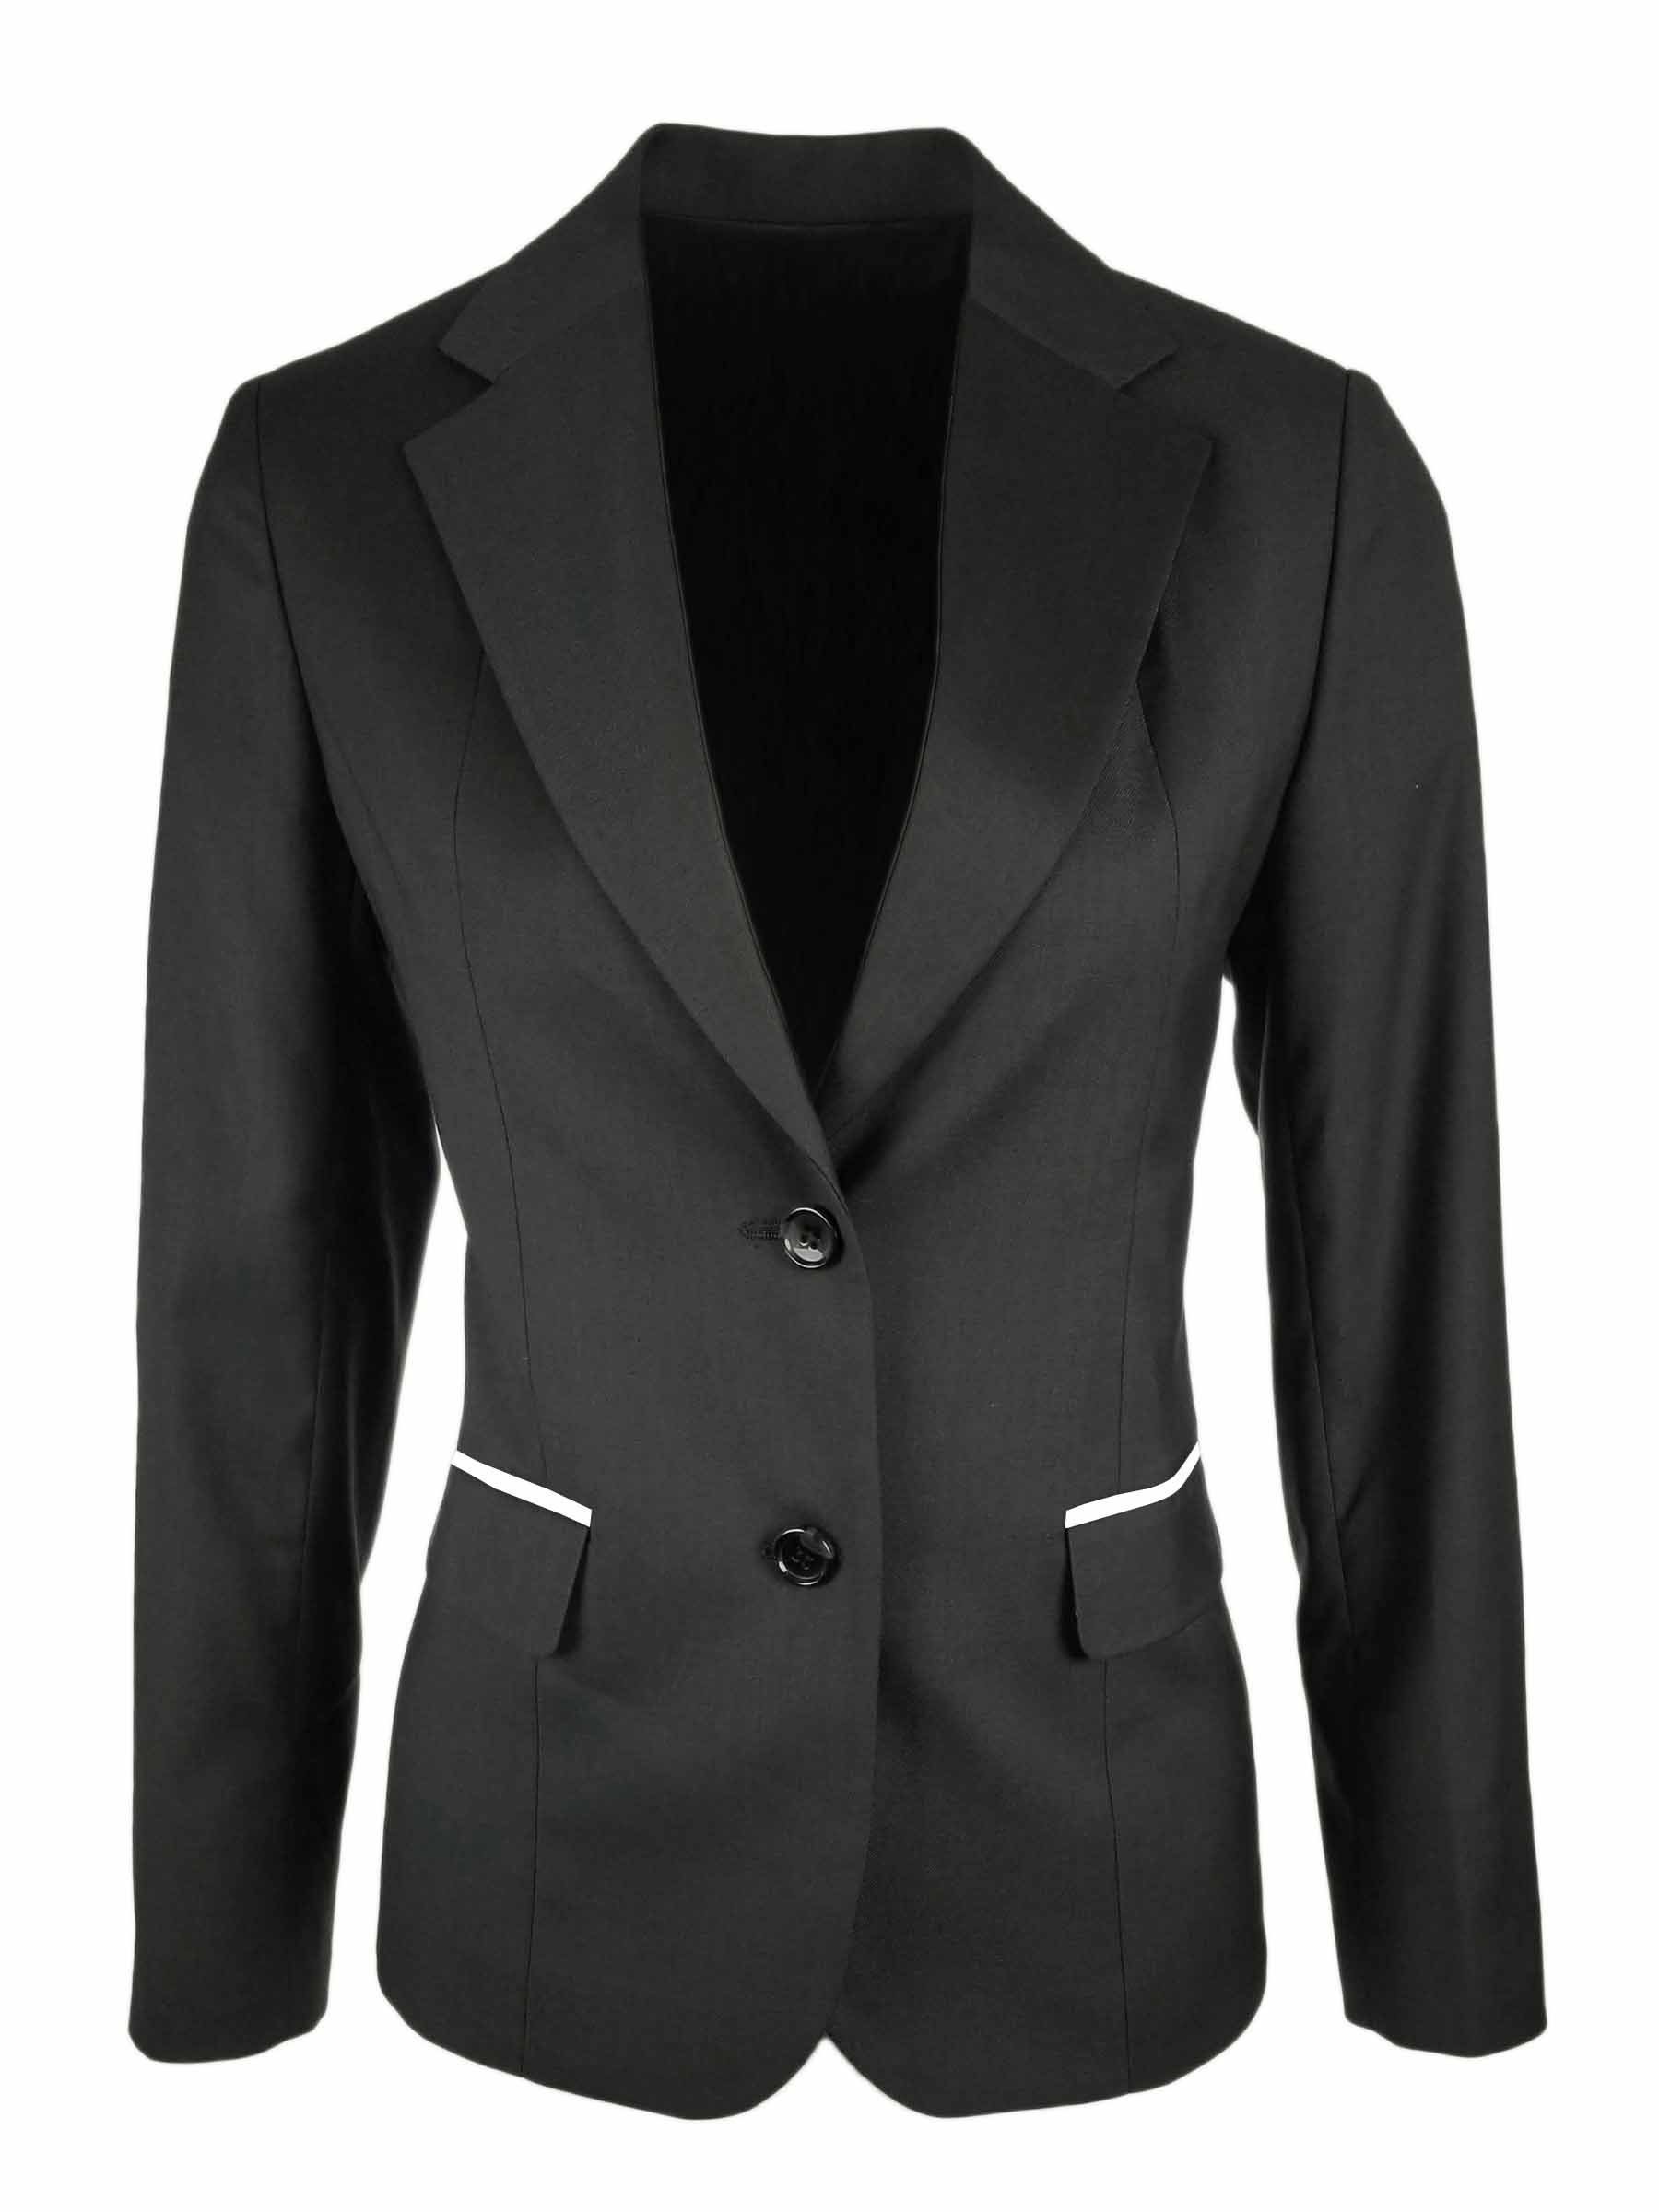 Women's Trim Jacket - Black with White - Uniform Edit